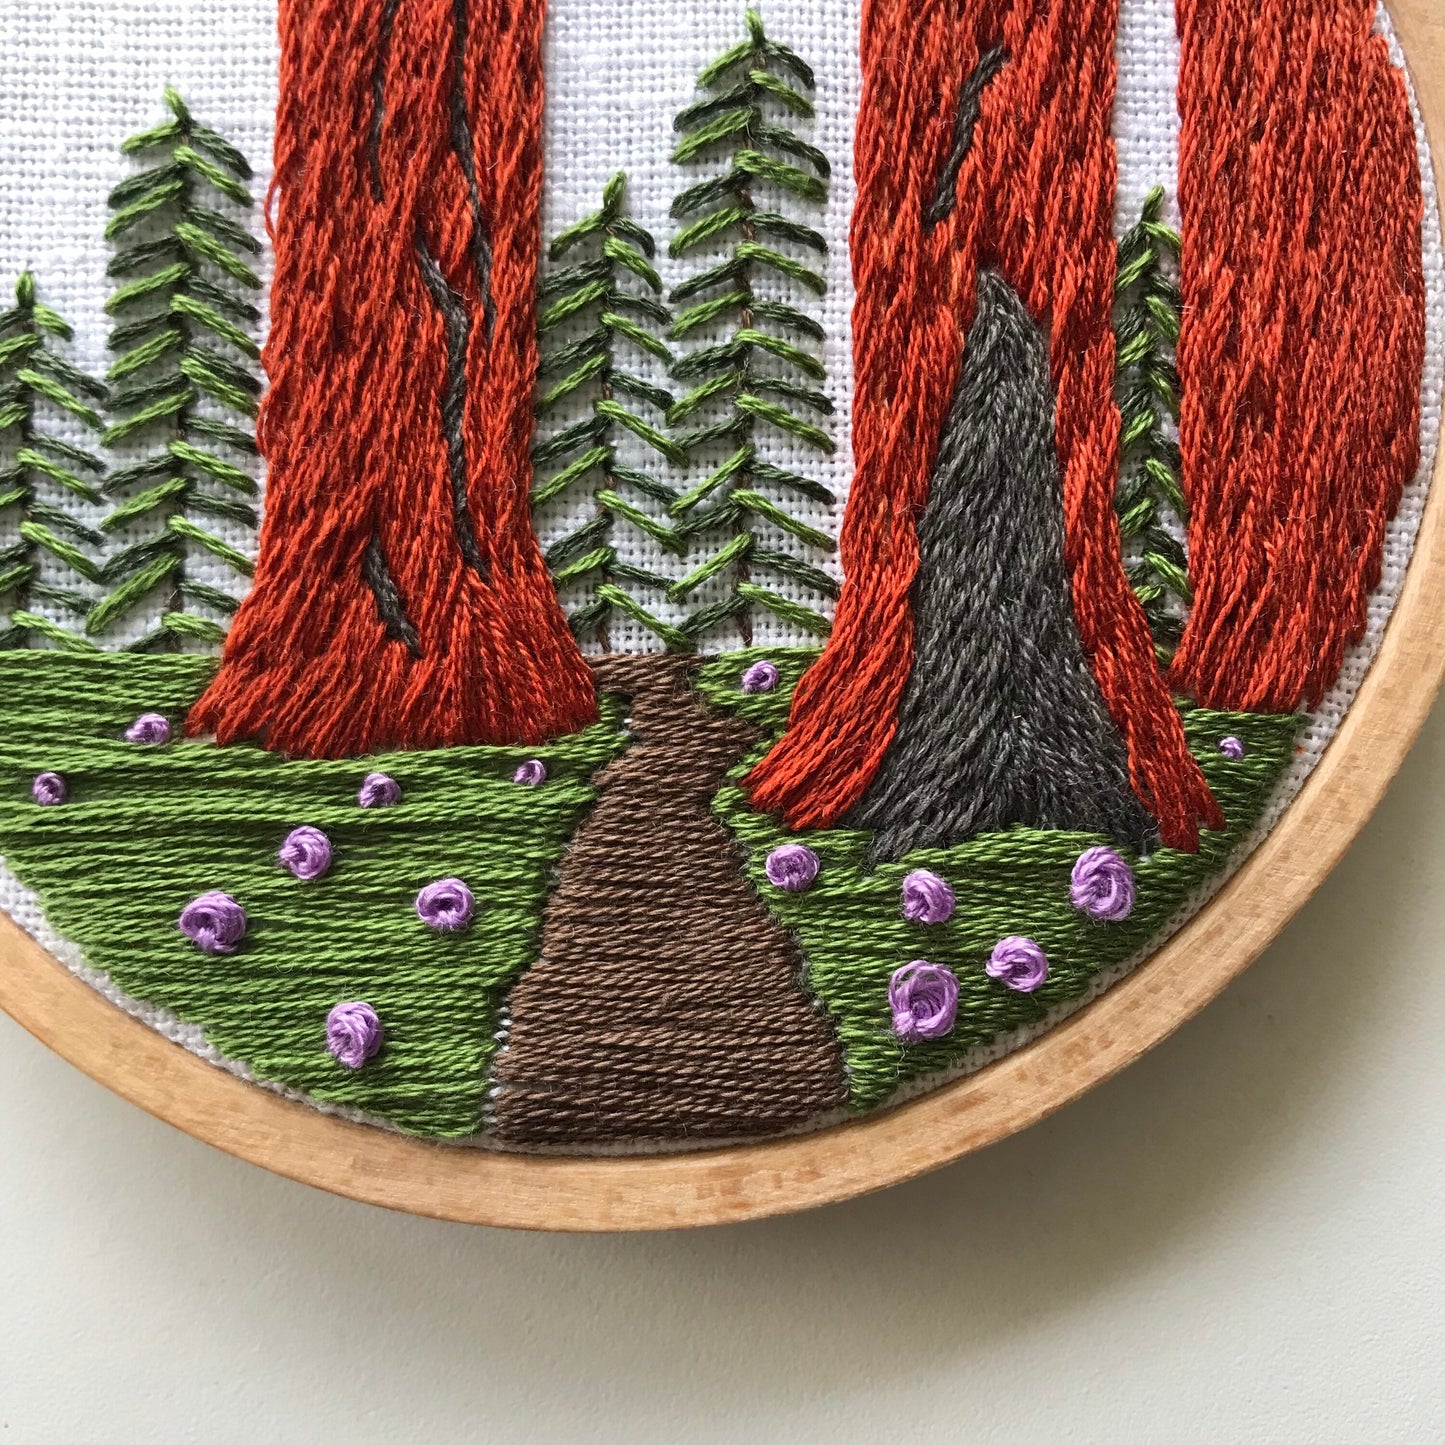 Sequoia Grove: Intermediate Embroidery Kit